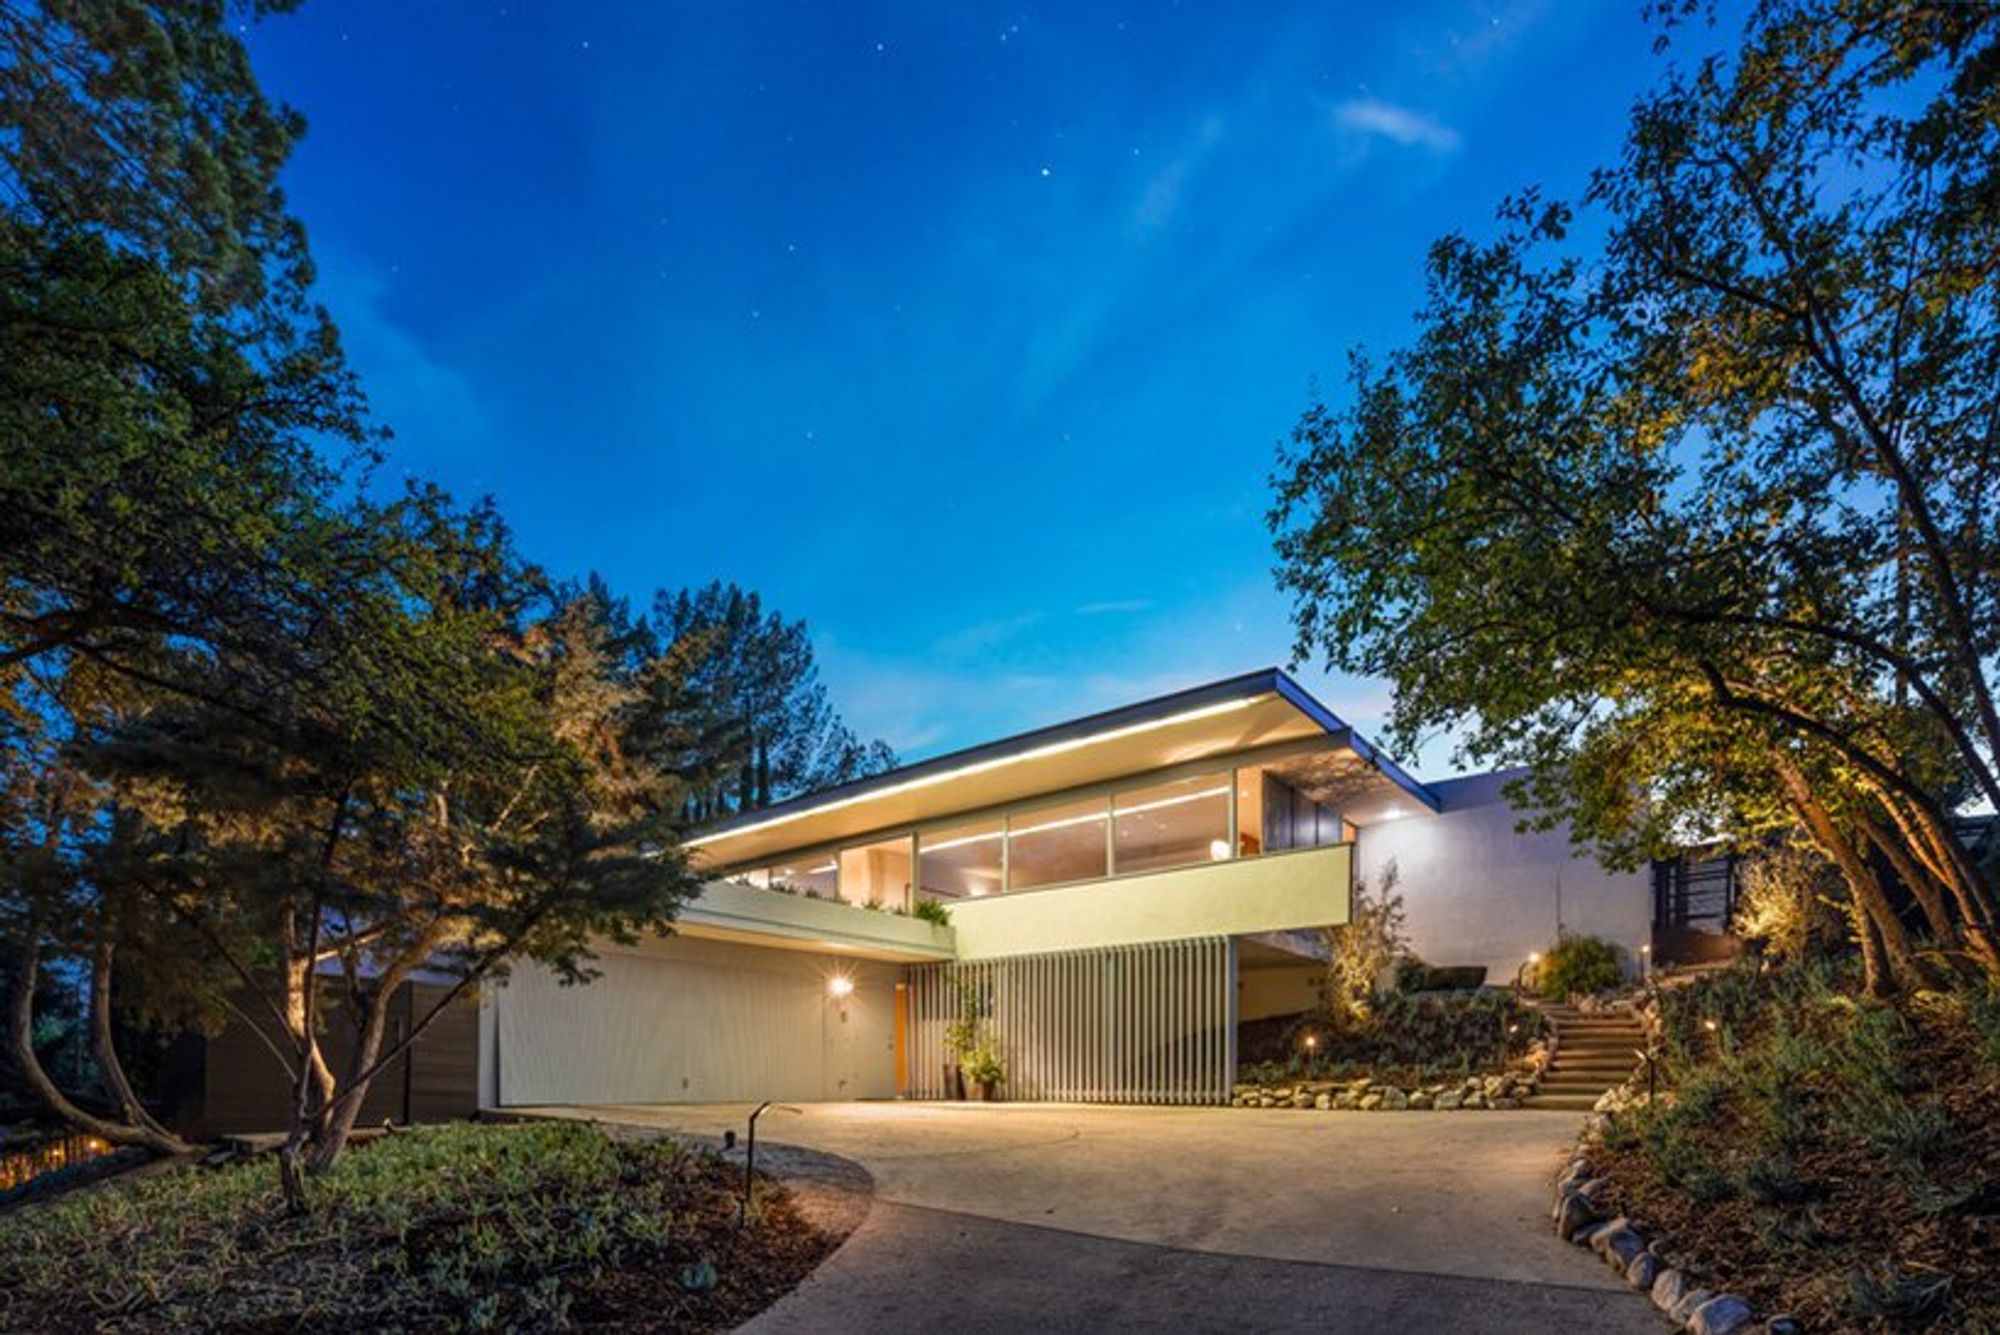 richard neutra's modernist 1962-built baldwin house soon to list for $3.3 million